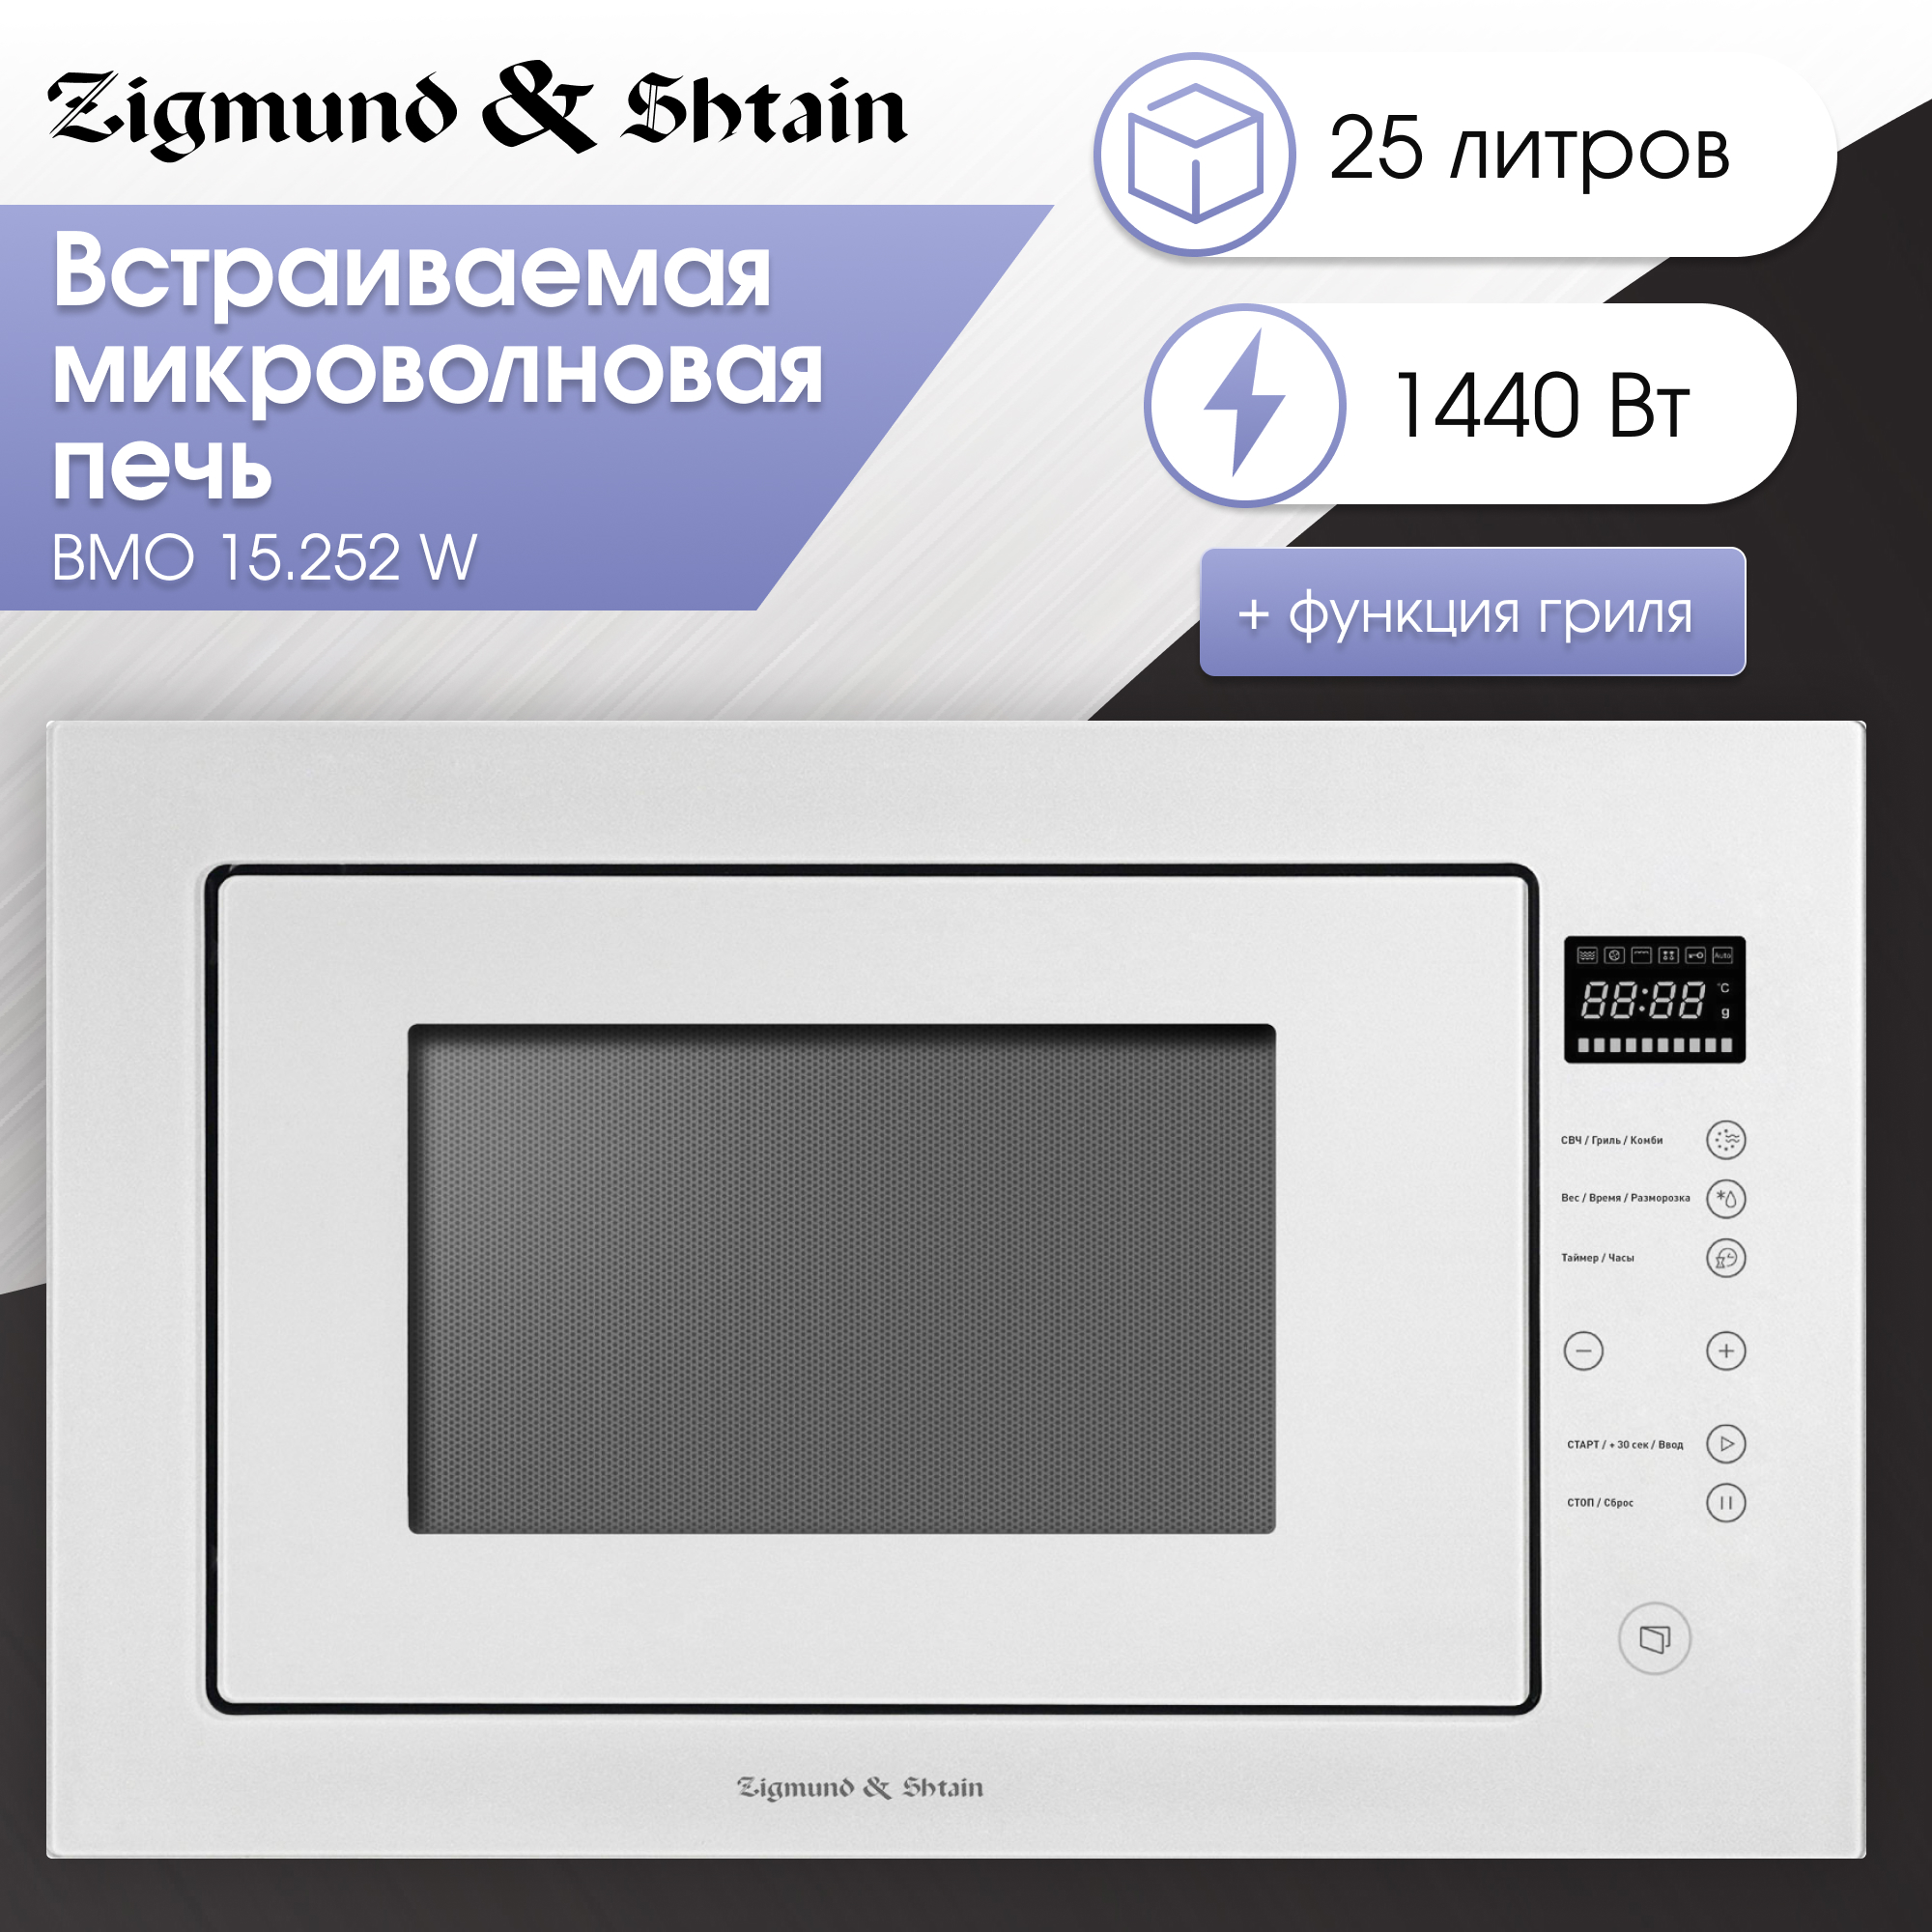 Встраиваемая микроволновая печь Zigmund & Shtain BMO 15.252 W White встраиваемая микроволновая печь candy micg25gdfw white